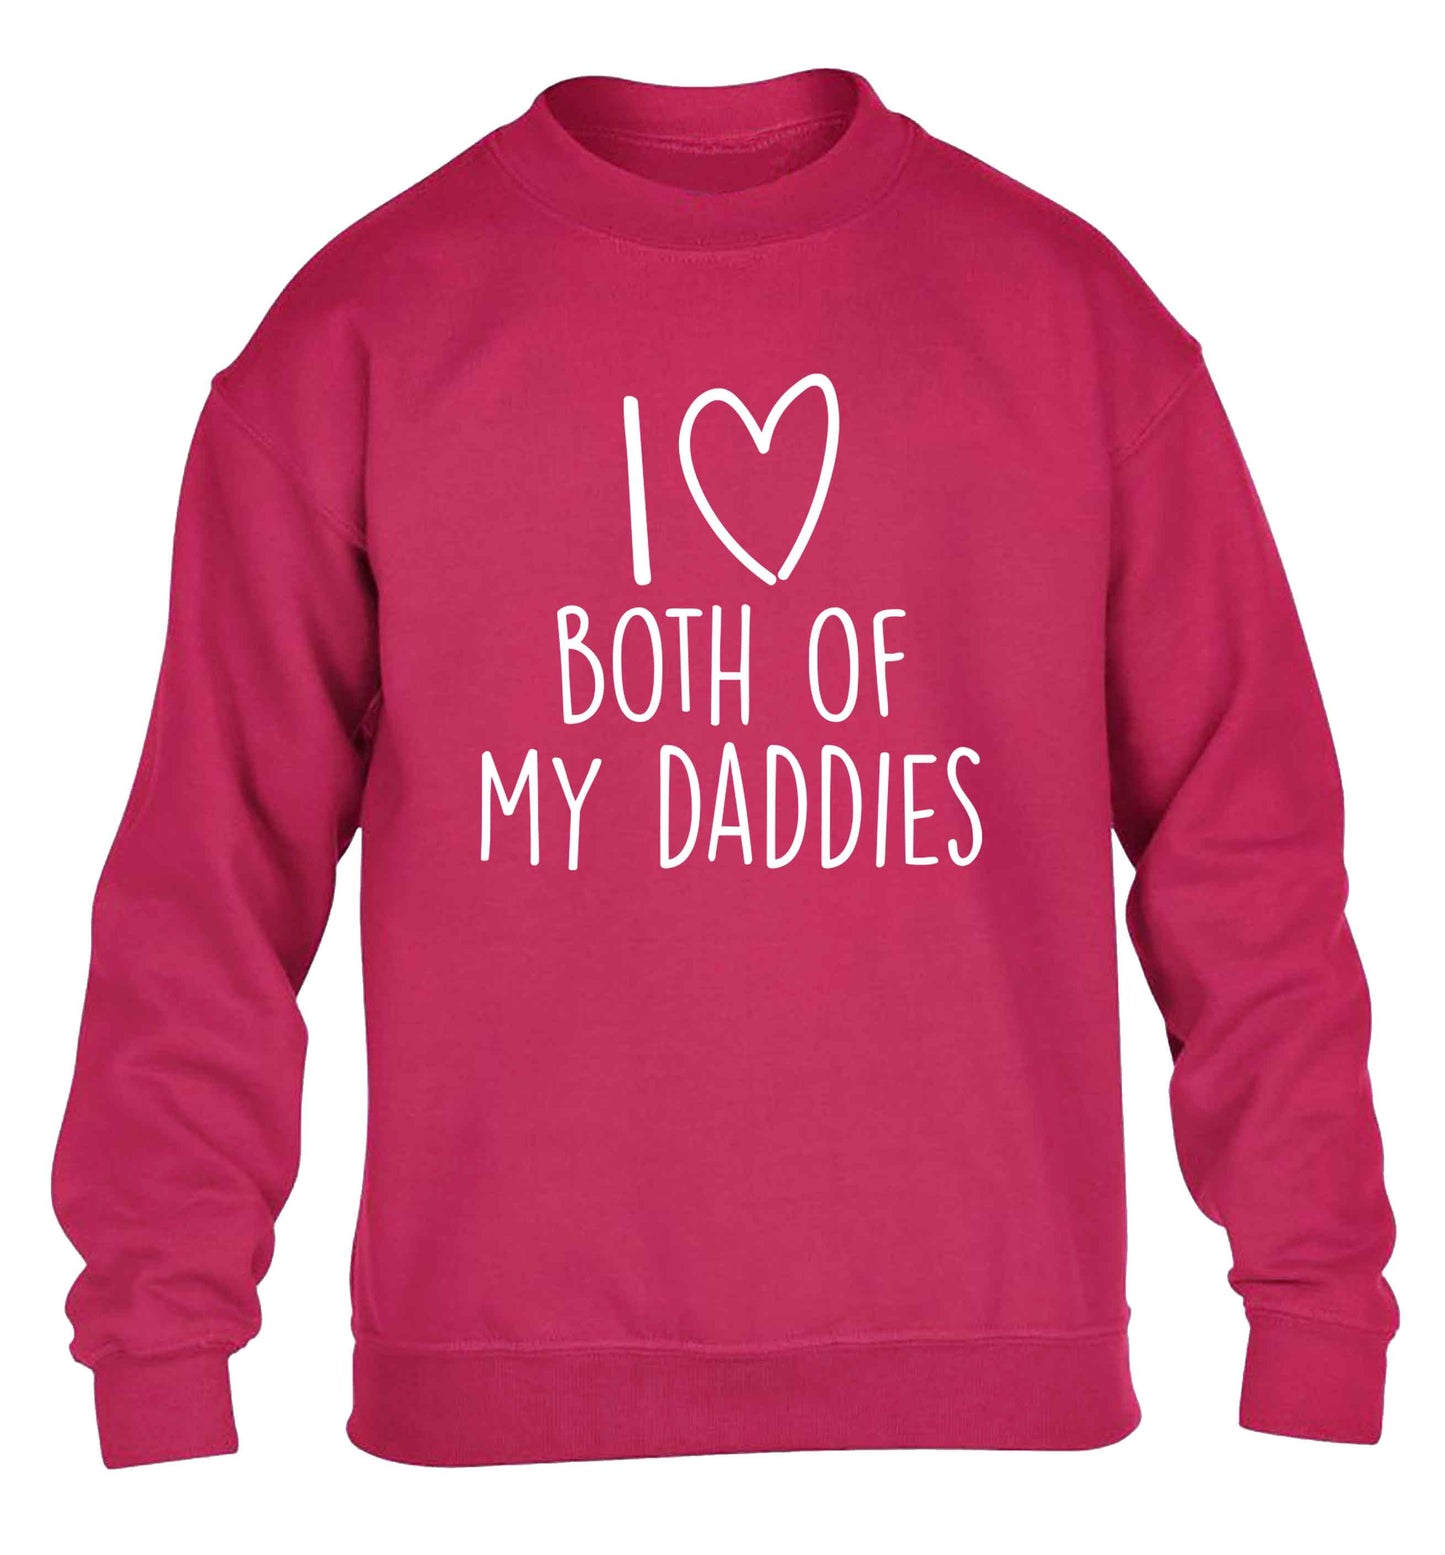 I love both of my daddies children's pink sweater 12-13 Years